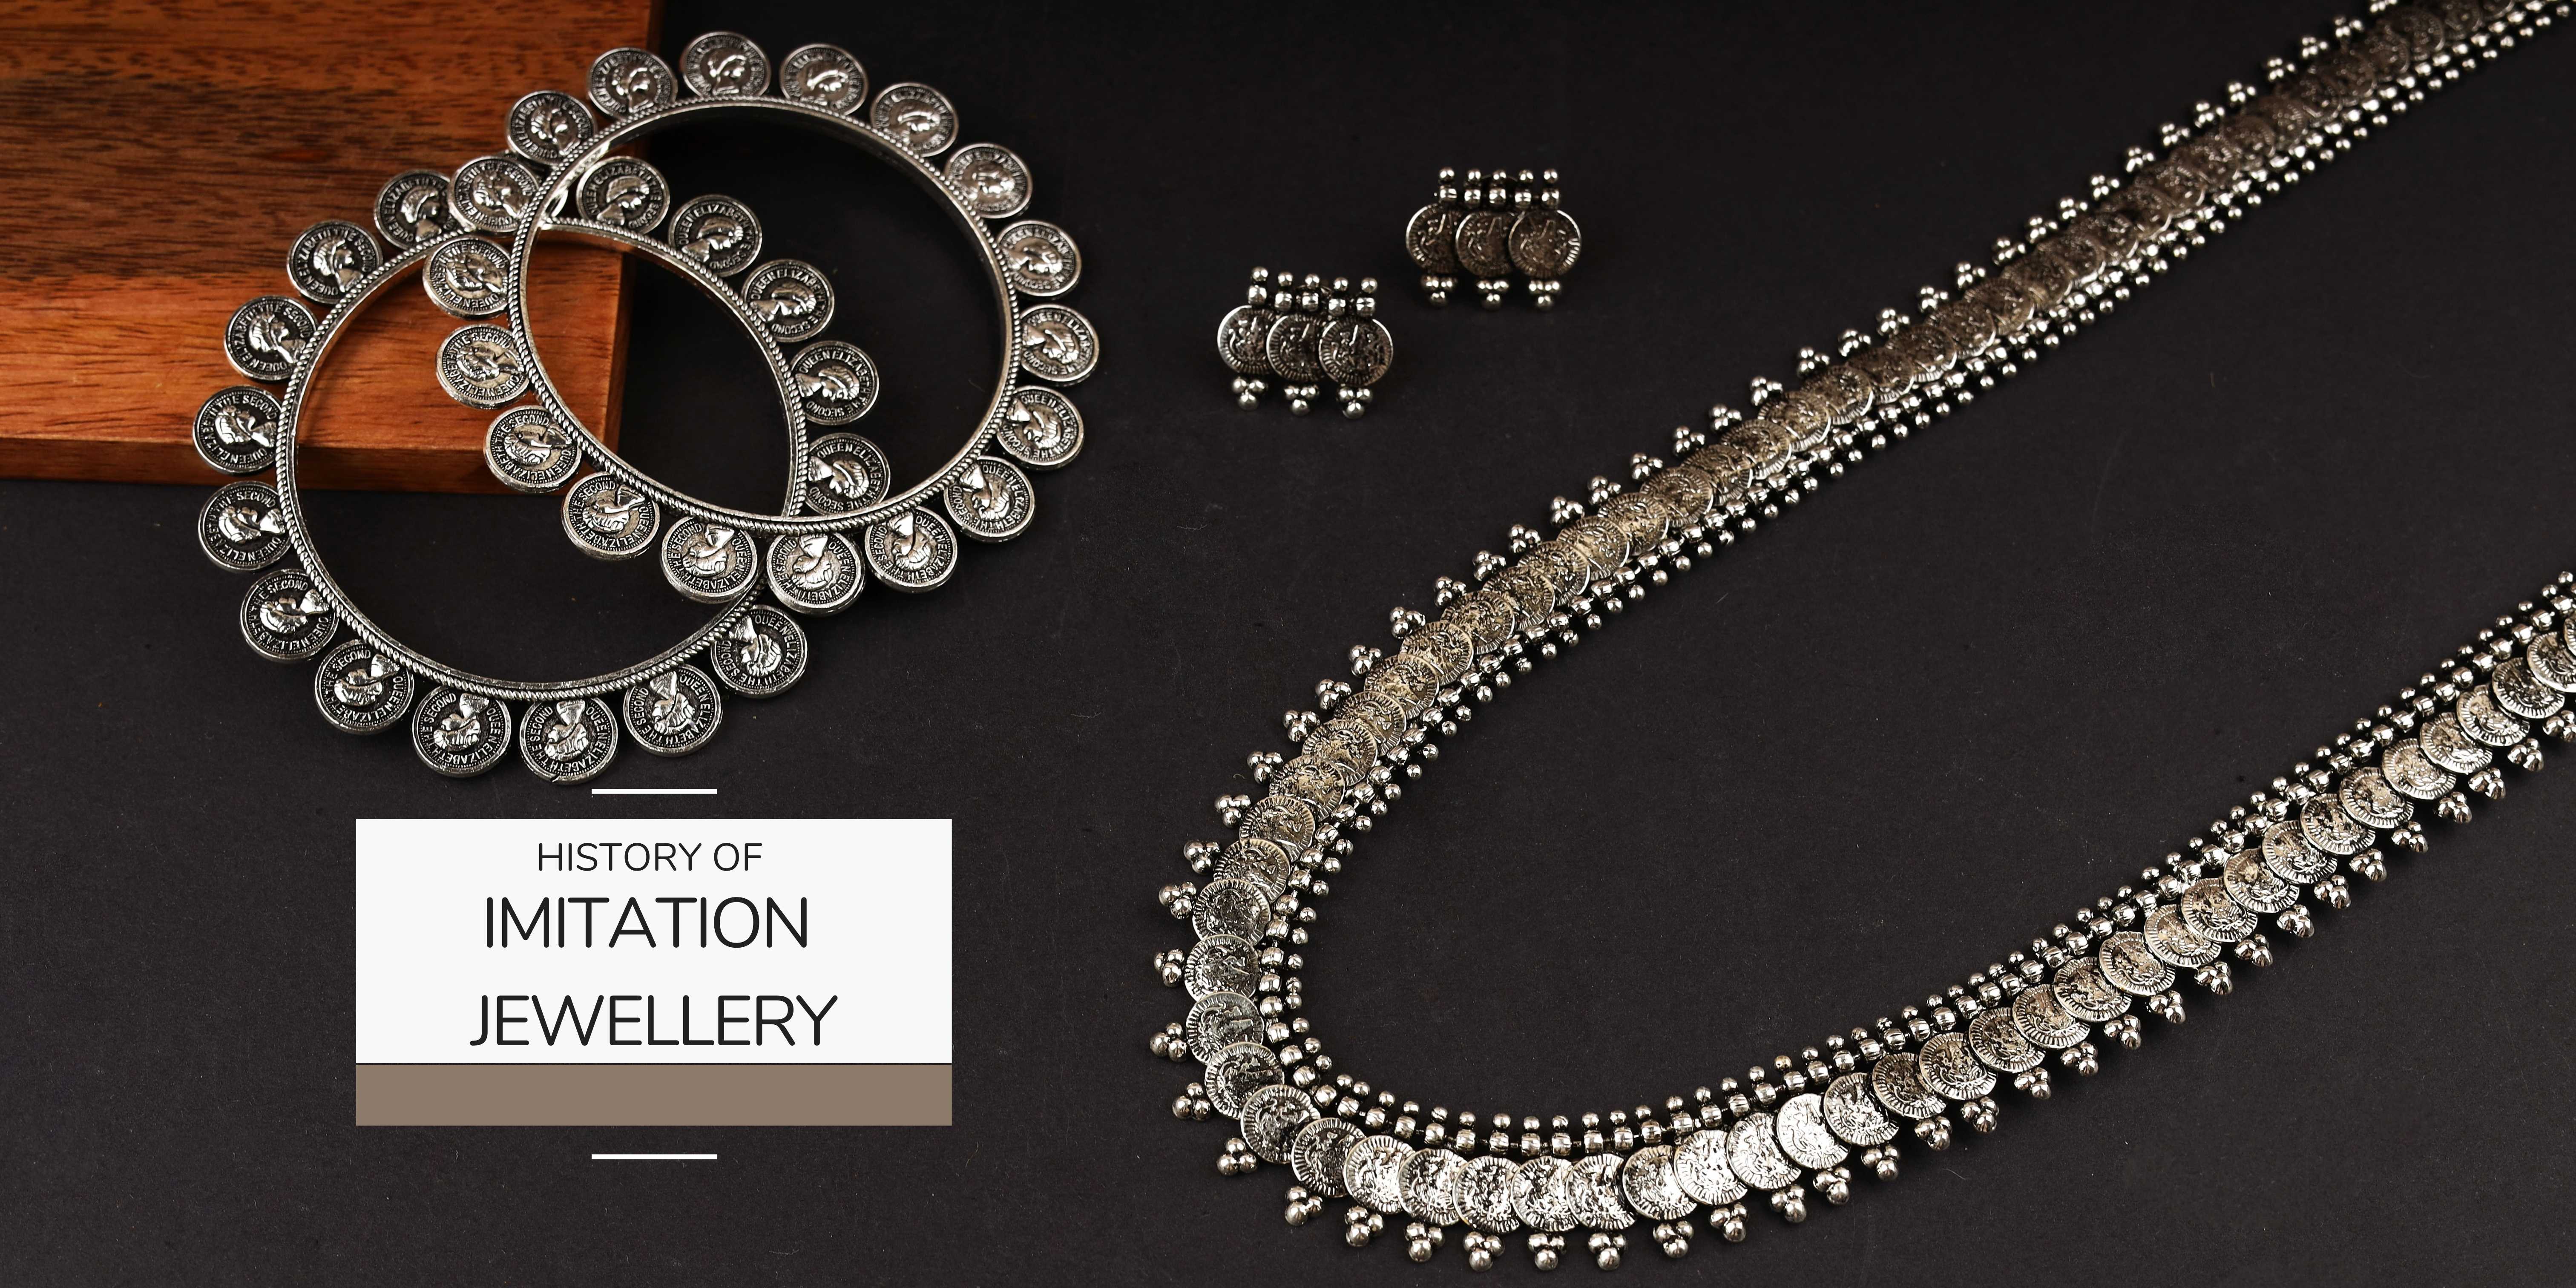 The history of imitation jewelry